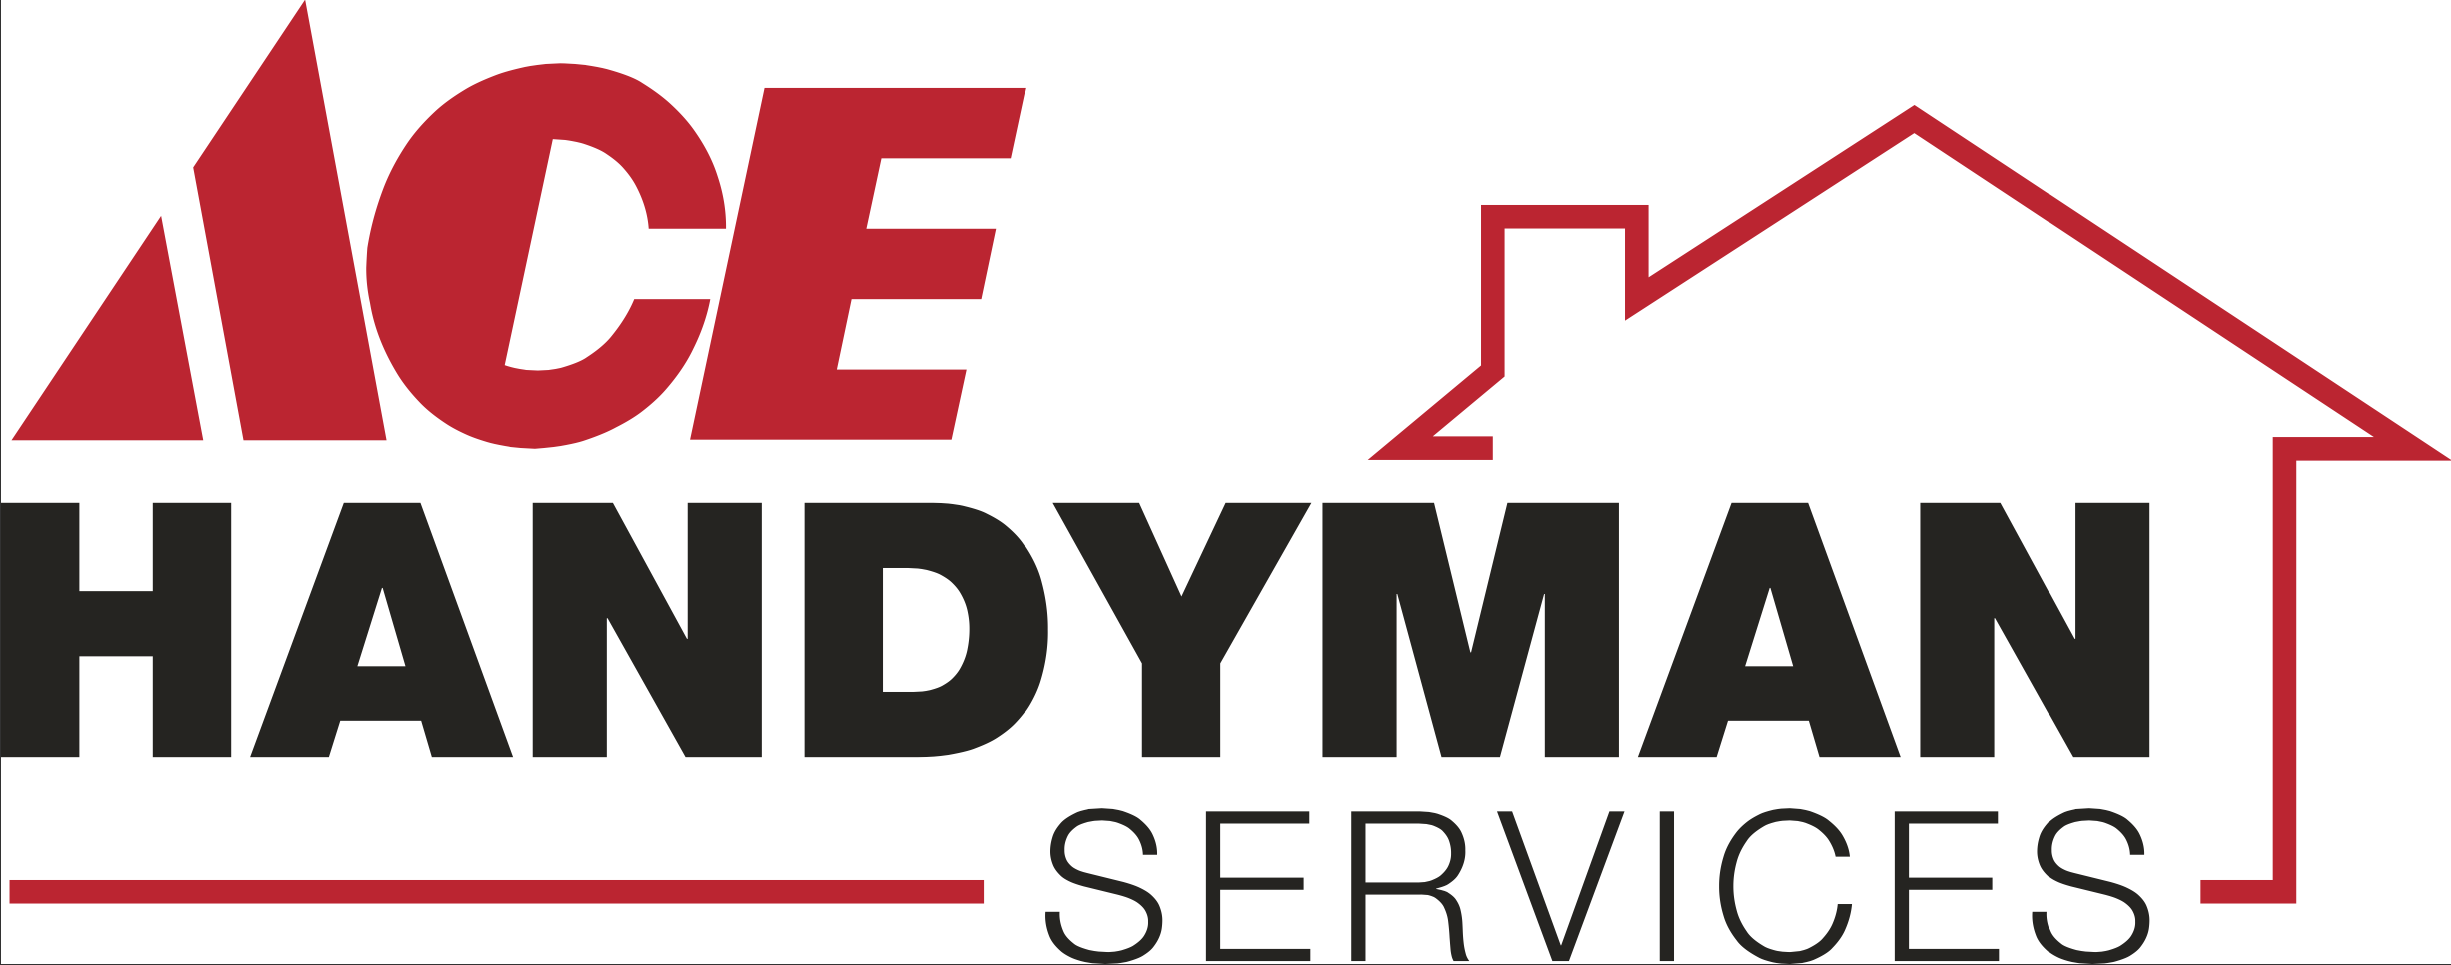 Ace Handyman Logo